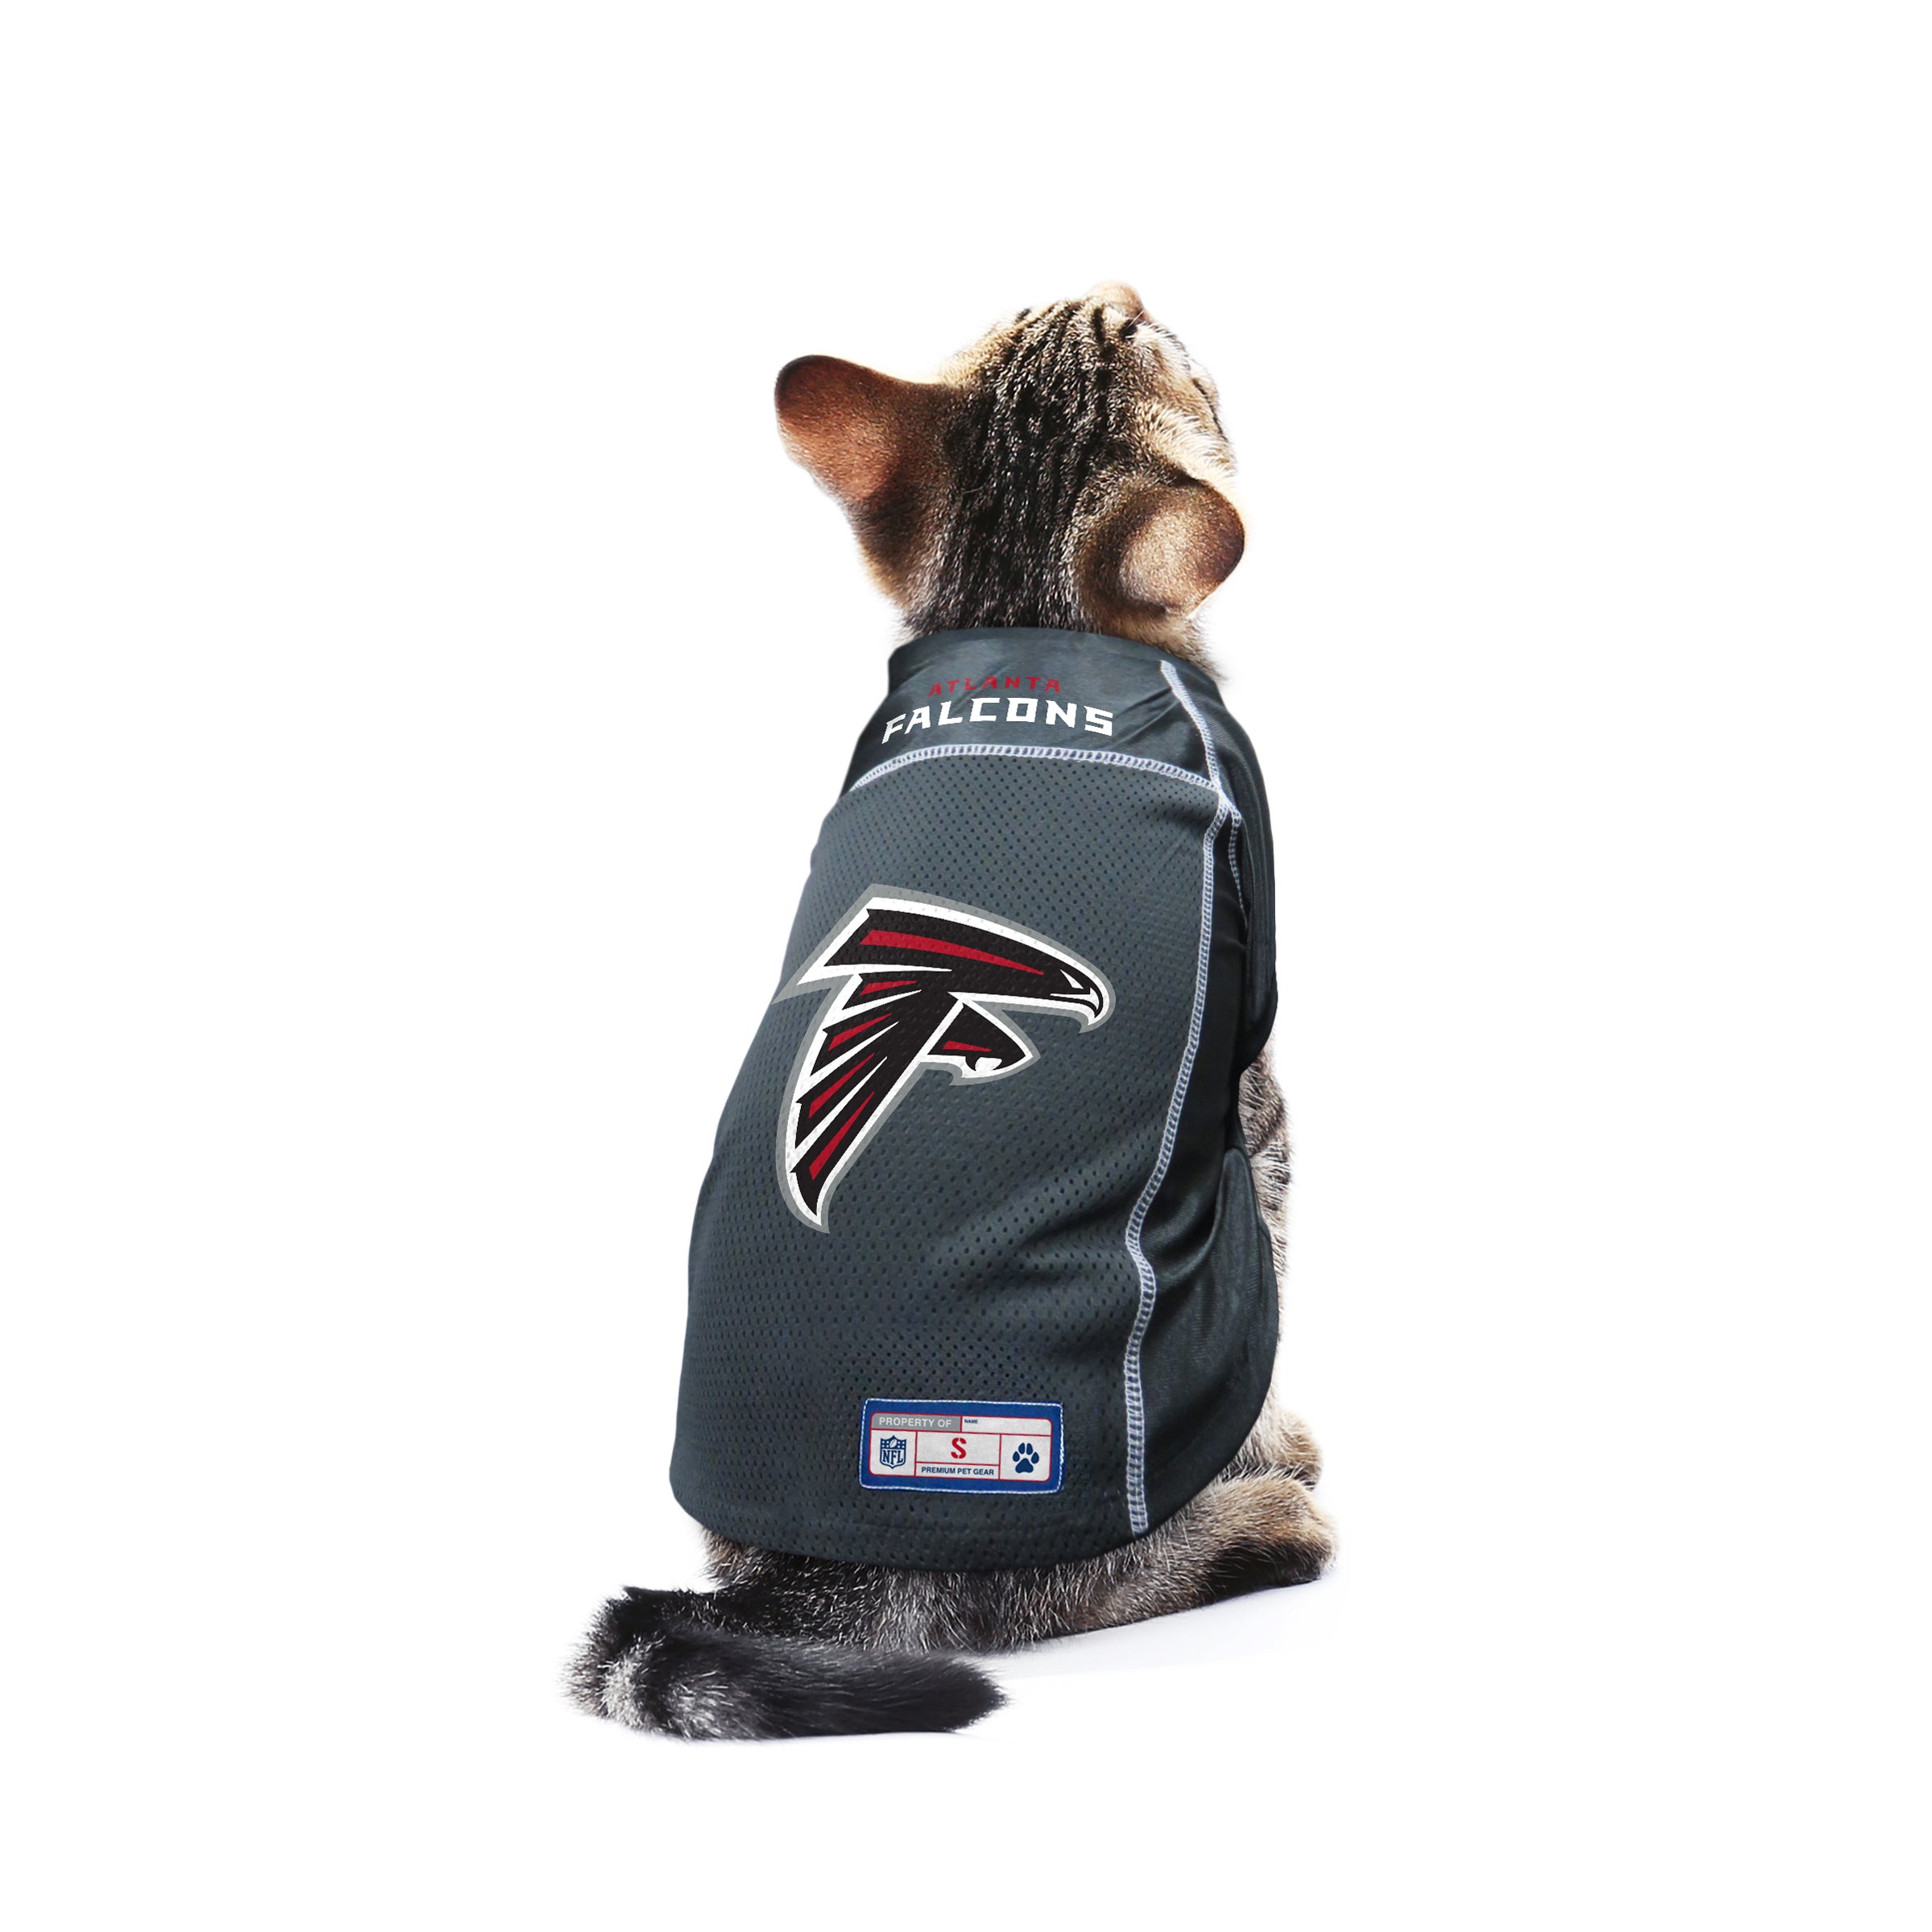  NFL Atlanta Falcons Dog Jersey, Size: Small. Best